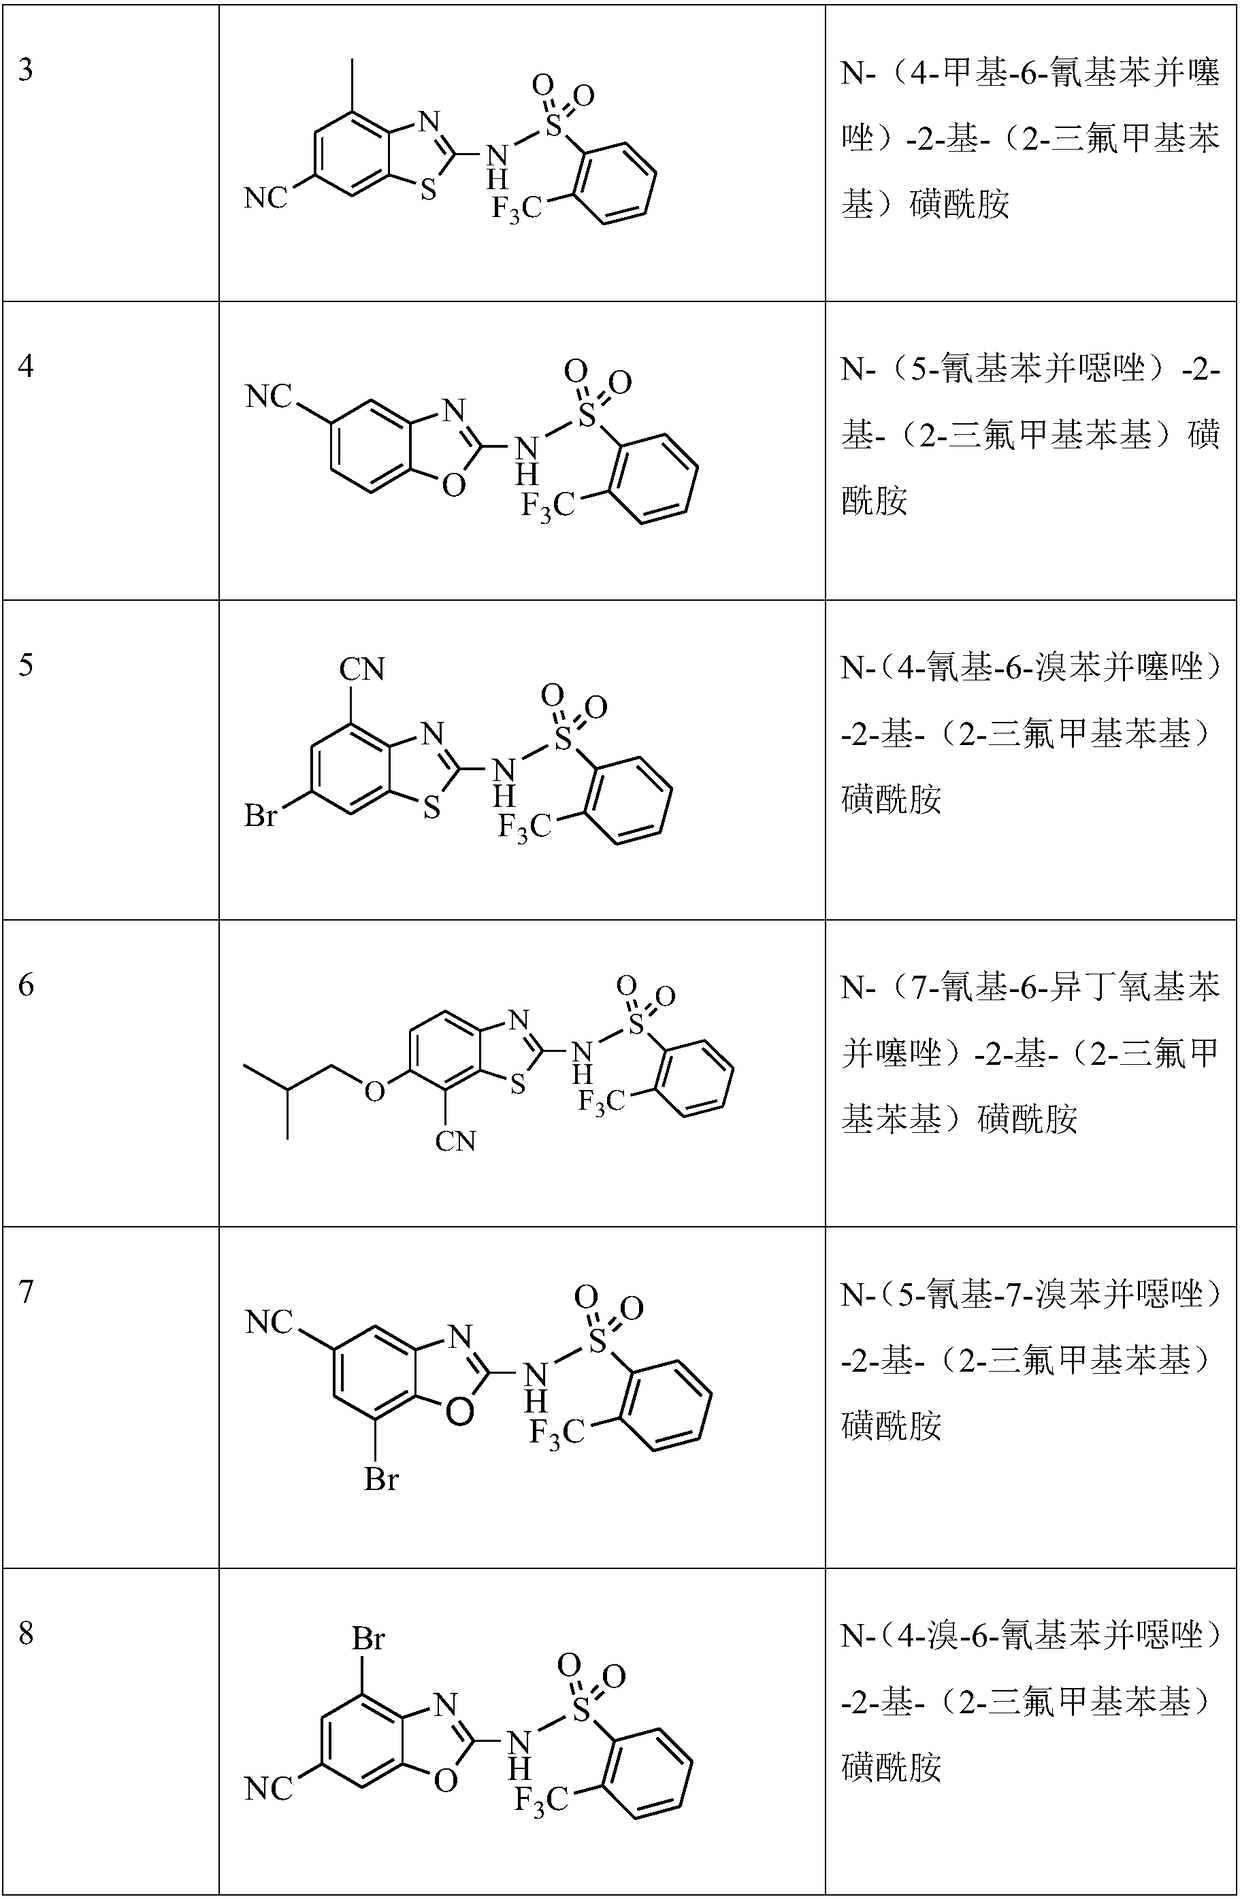 Medical application of 2-(trifluoromethyl)benzenesulfonamide derivatives